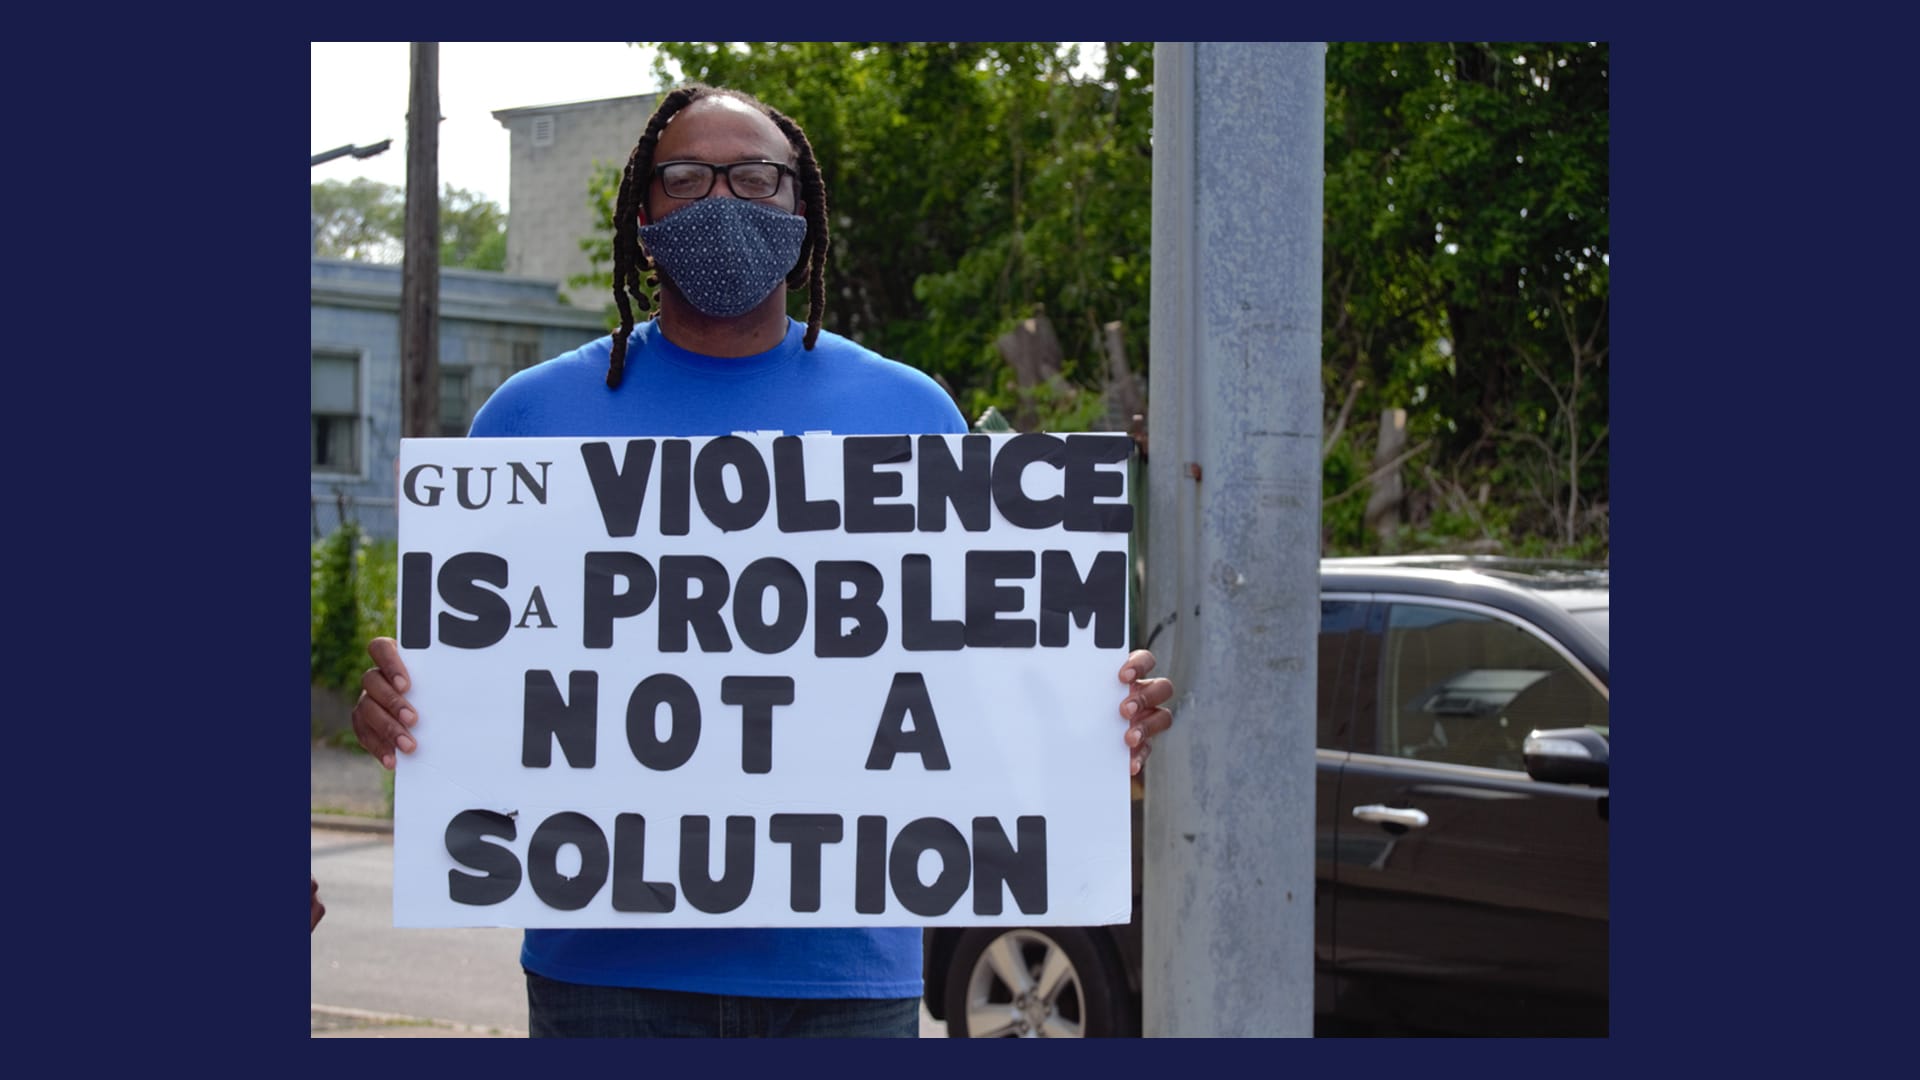 Teen mediation programs offer possible gun violence solution - WHYY